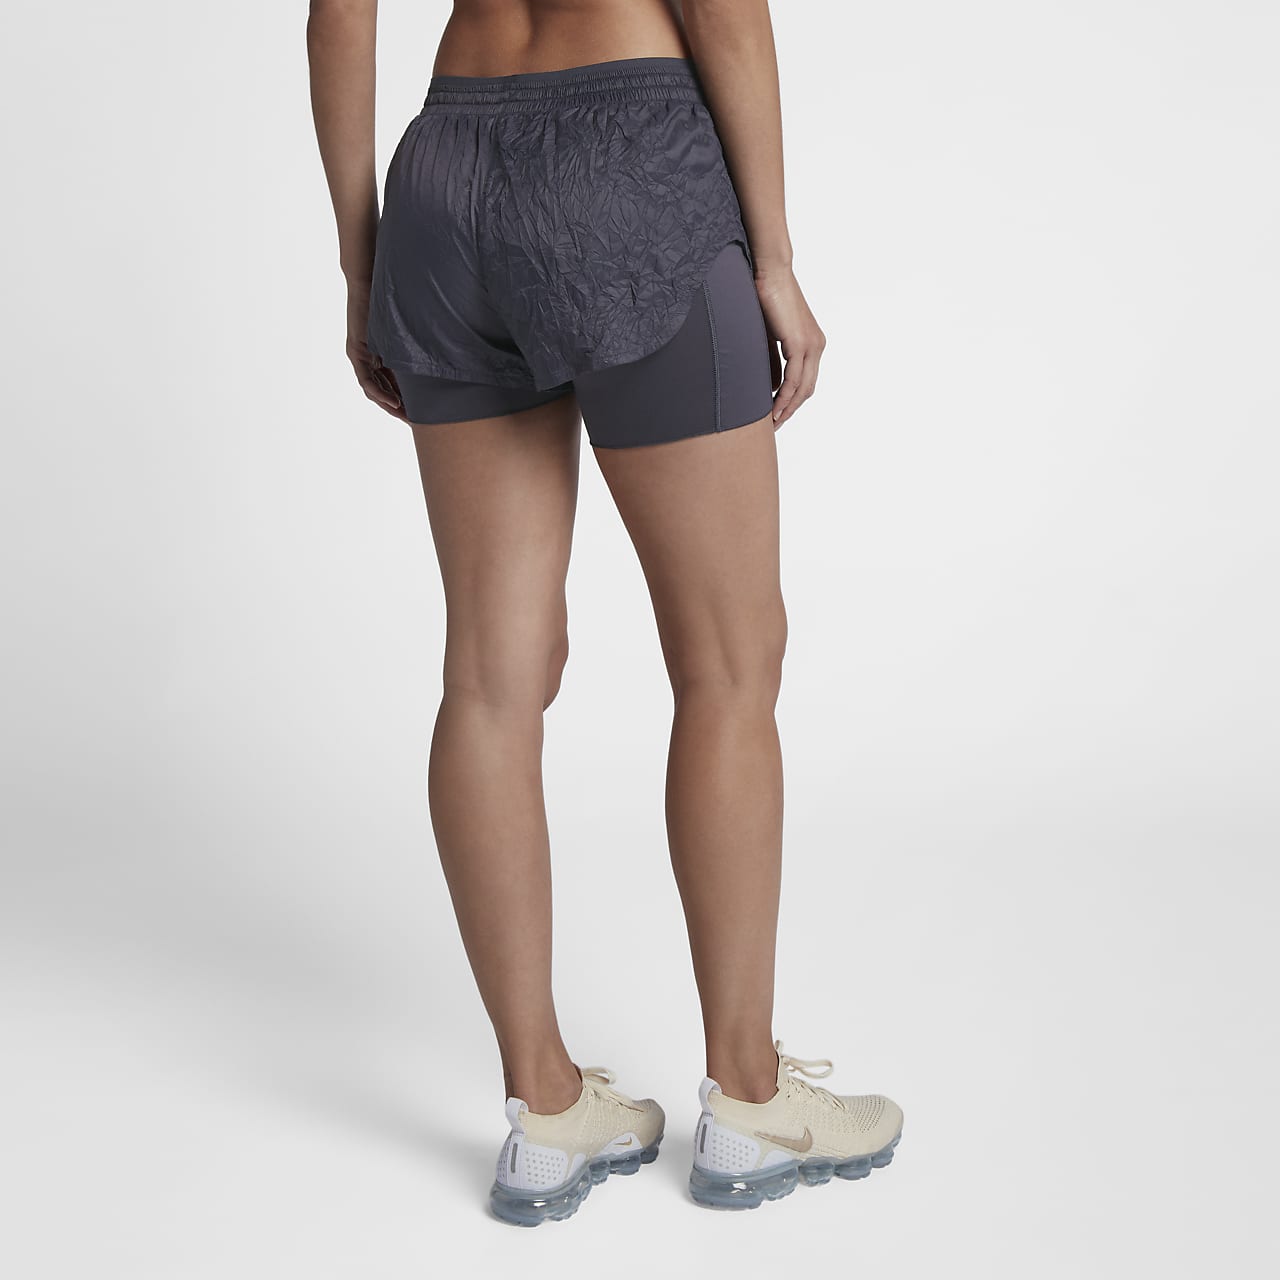 nike 2 in 1 running shorts womens